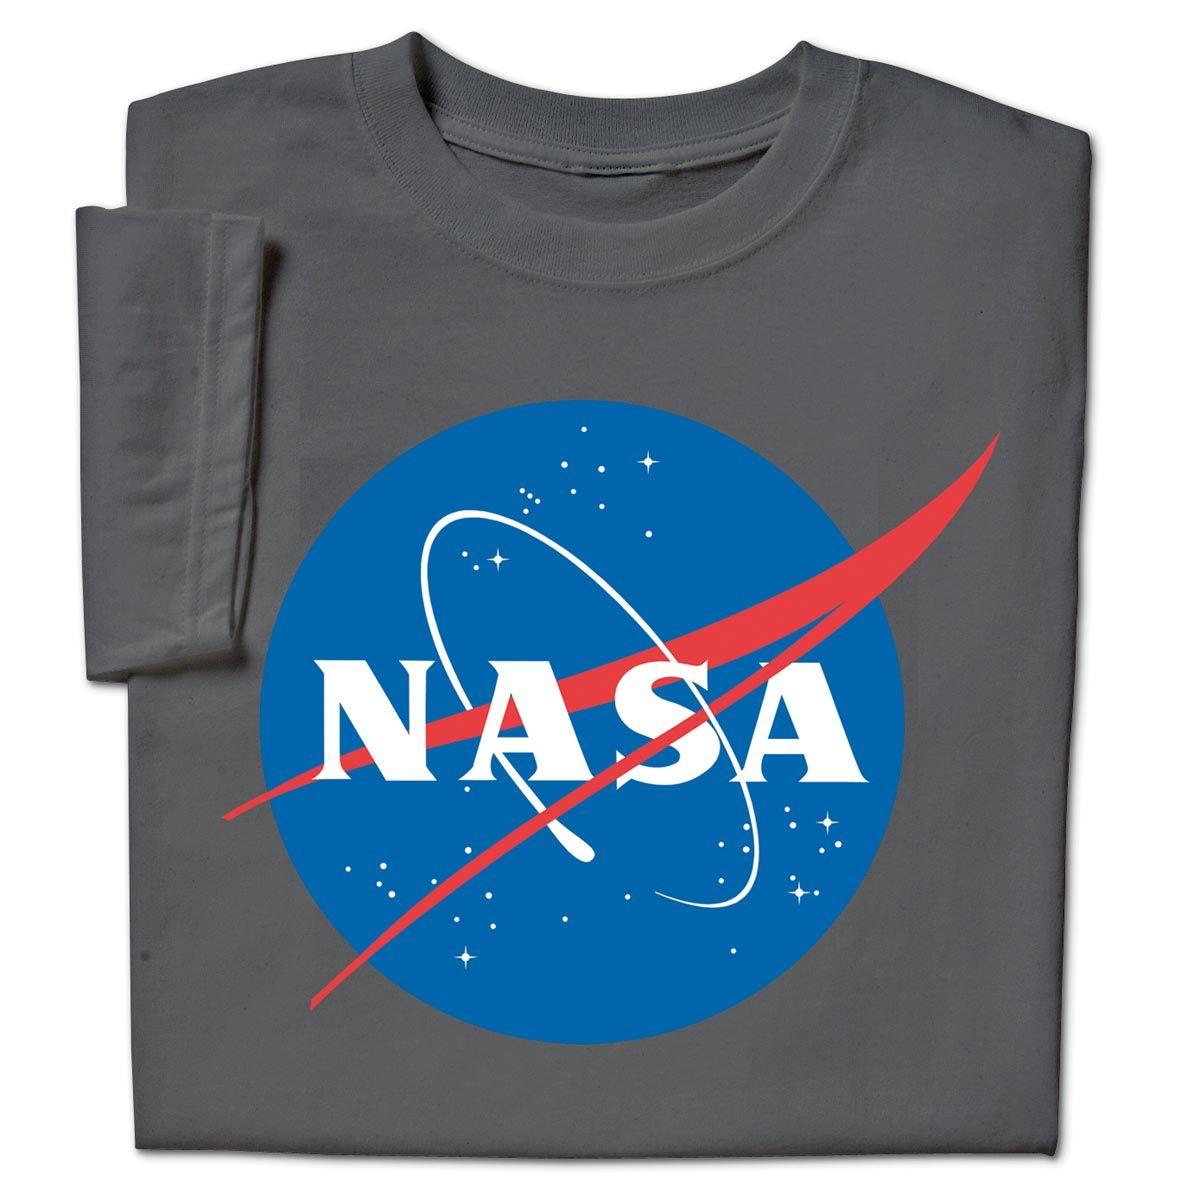 NASA Logo - NASA Shirt Meatball Science Space T-shirt Tee Charcoal Men Women Adult